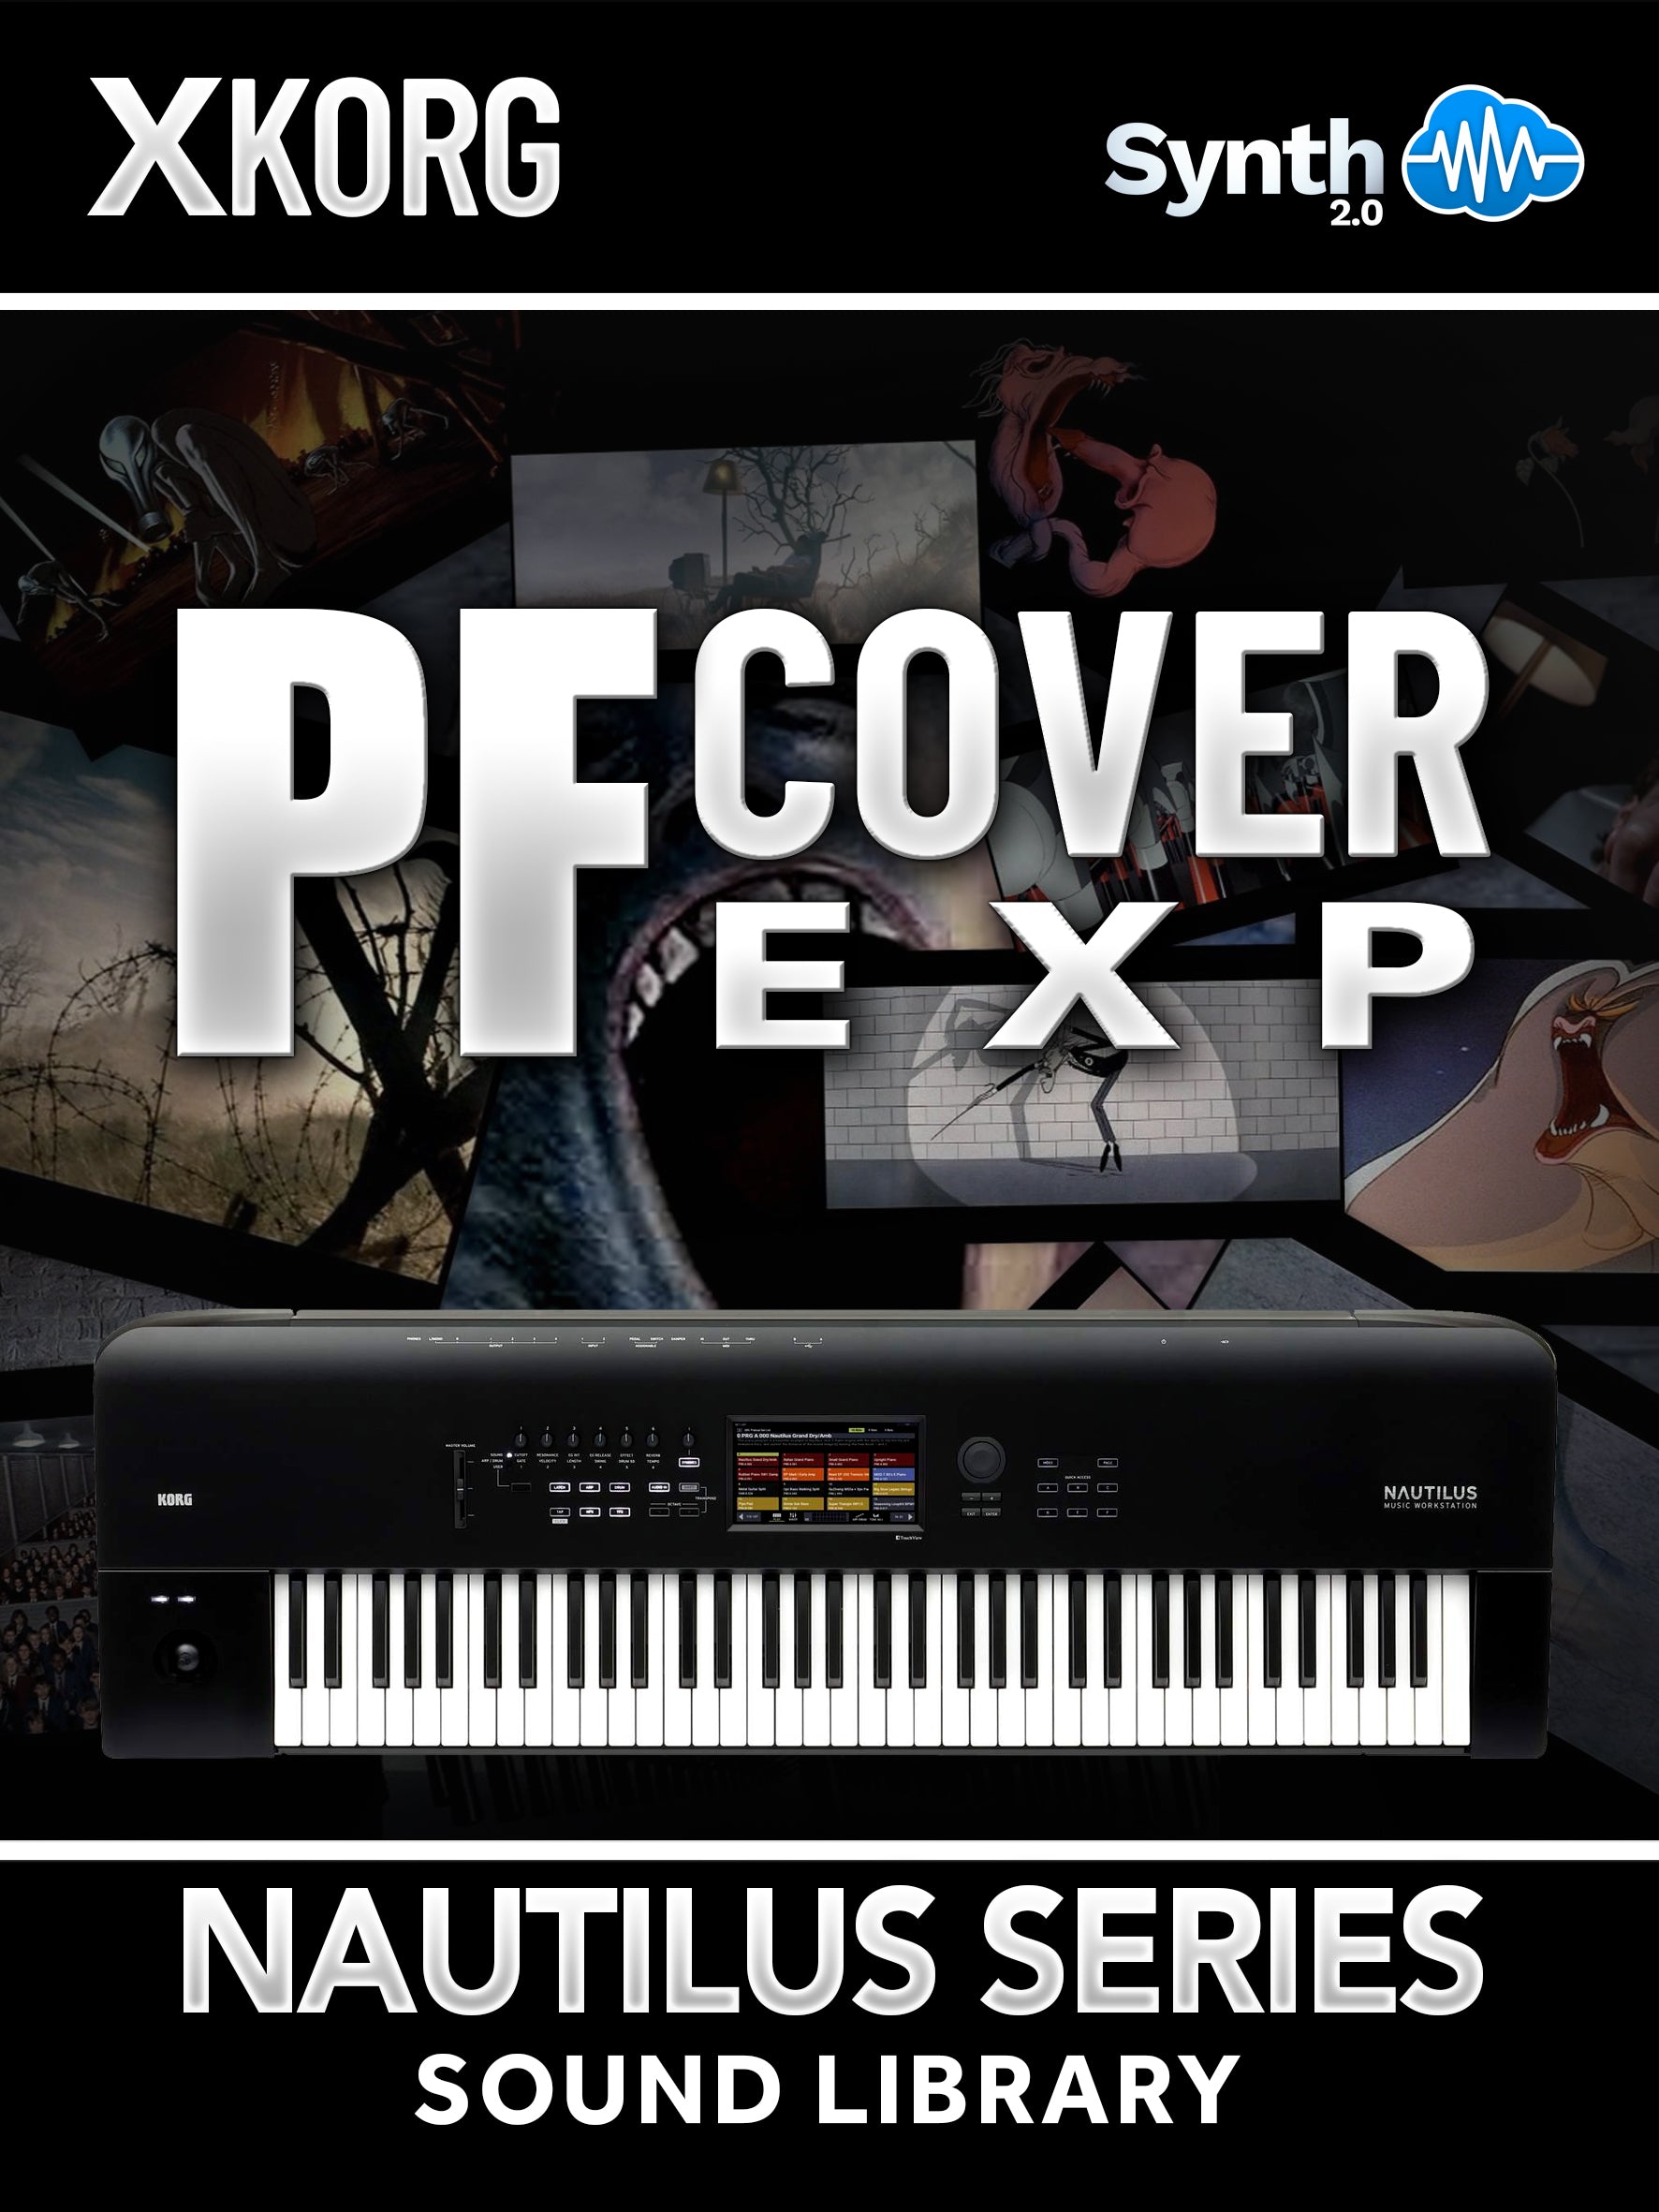 FPL004 - PF Cover EXP - Korg Nautilus Series ( 40 presets )